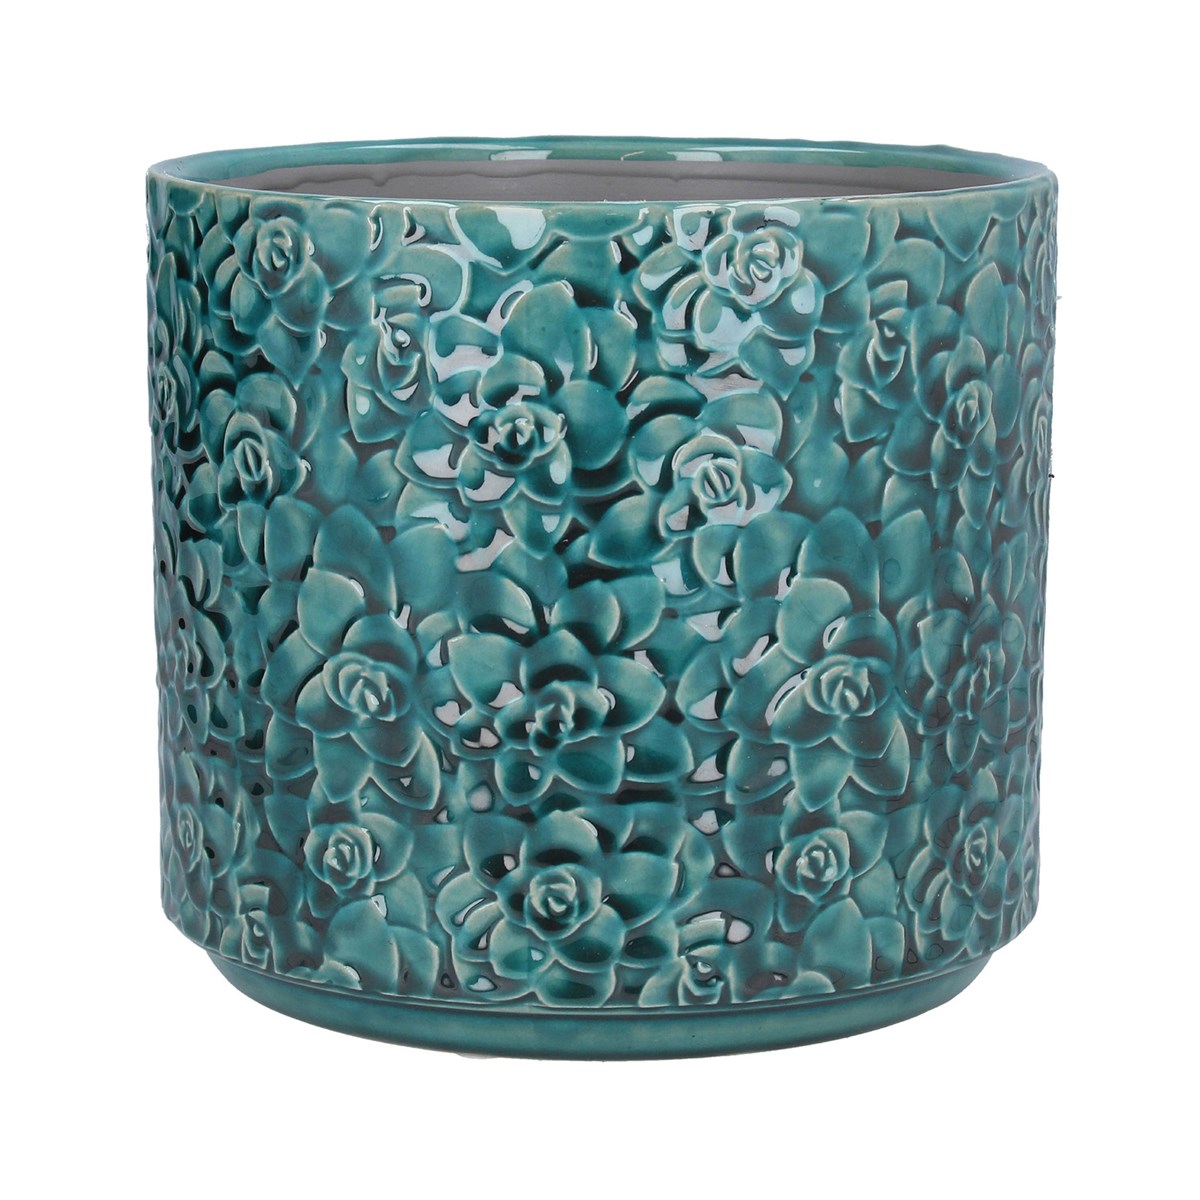 Gisela Graham Teal Succulents Ceramic Pot Cover, Large